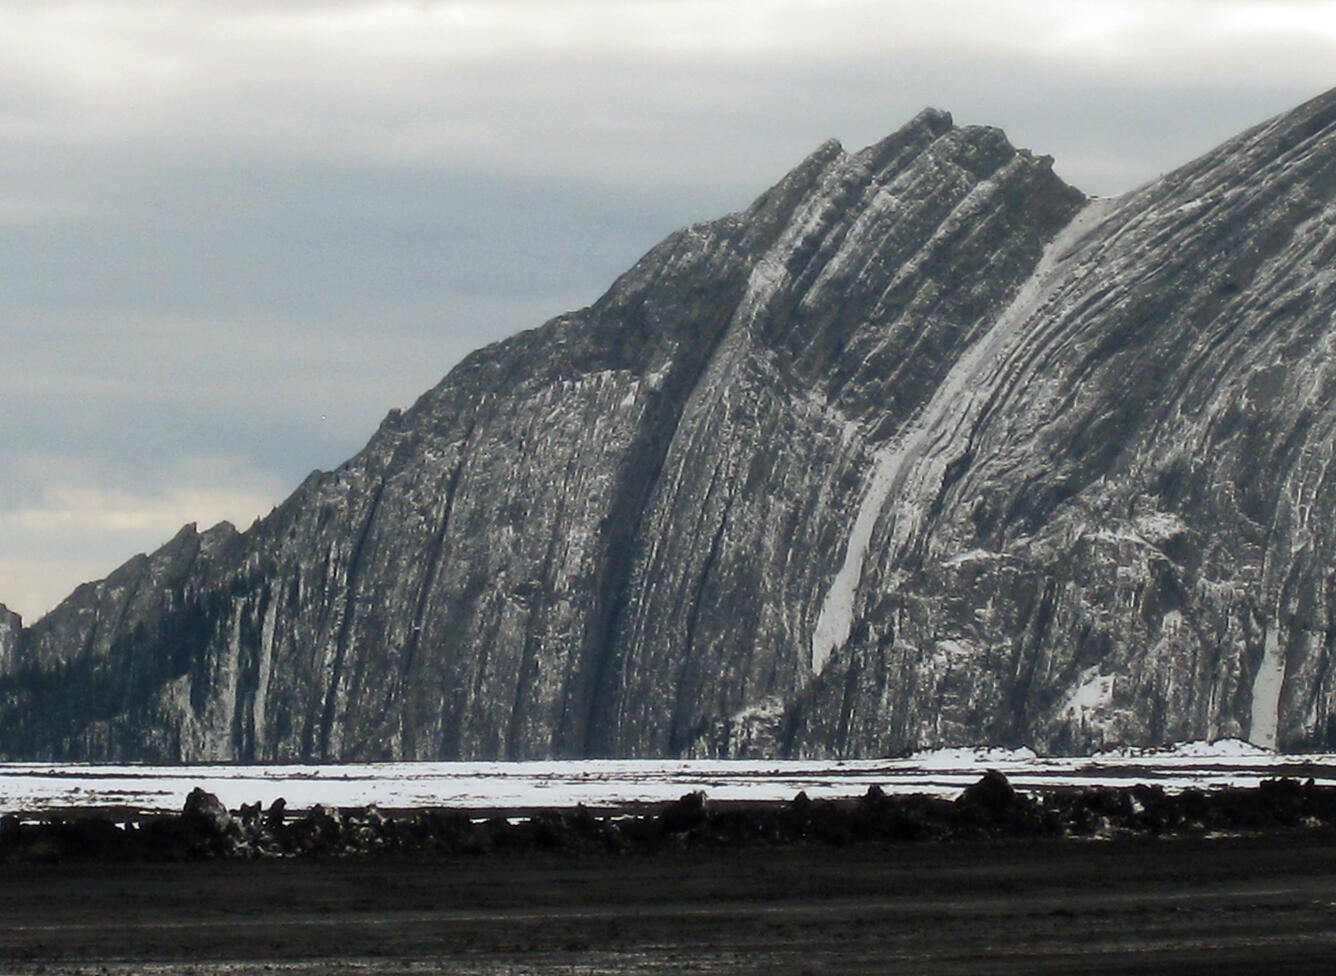 Coal beds in British Columbia, Canada.